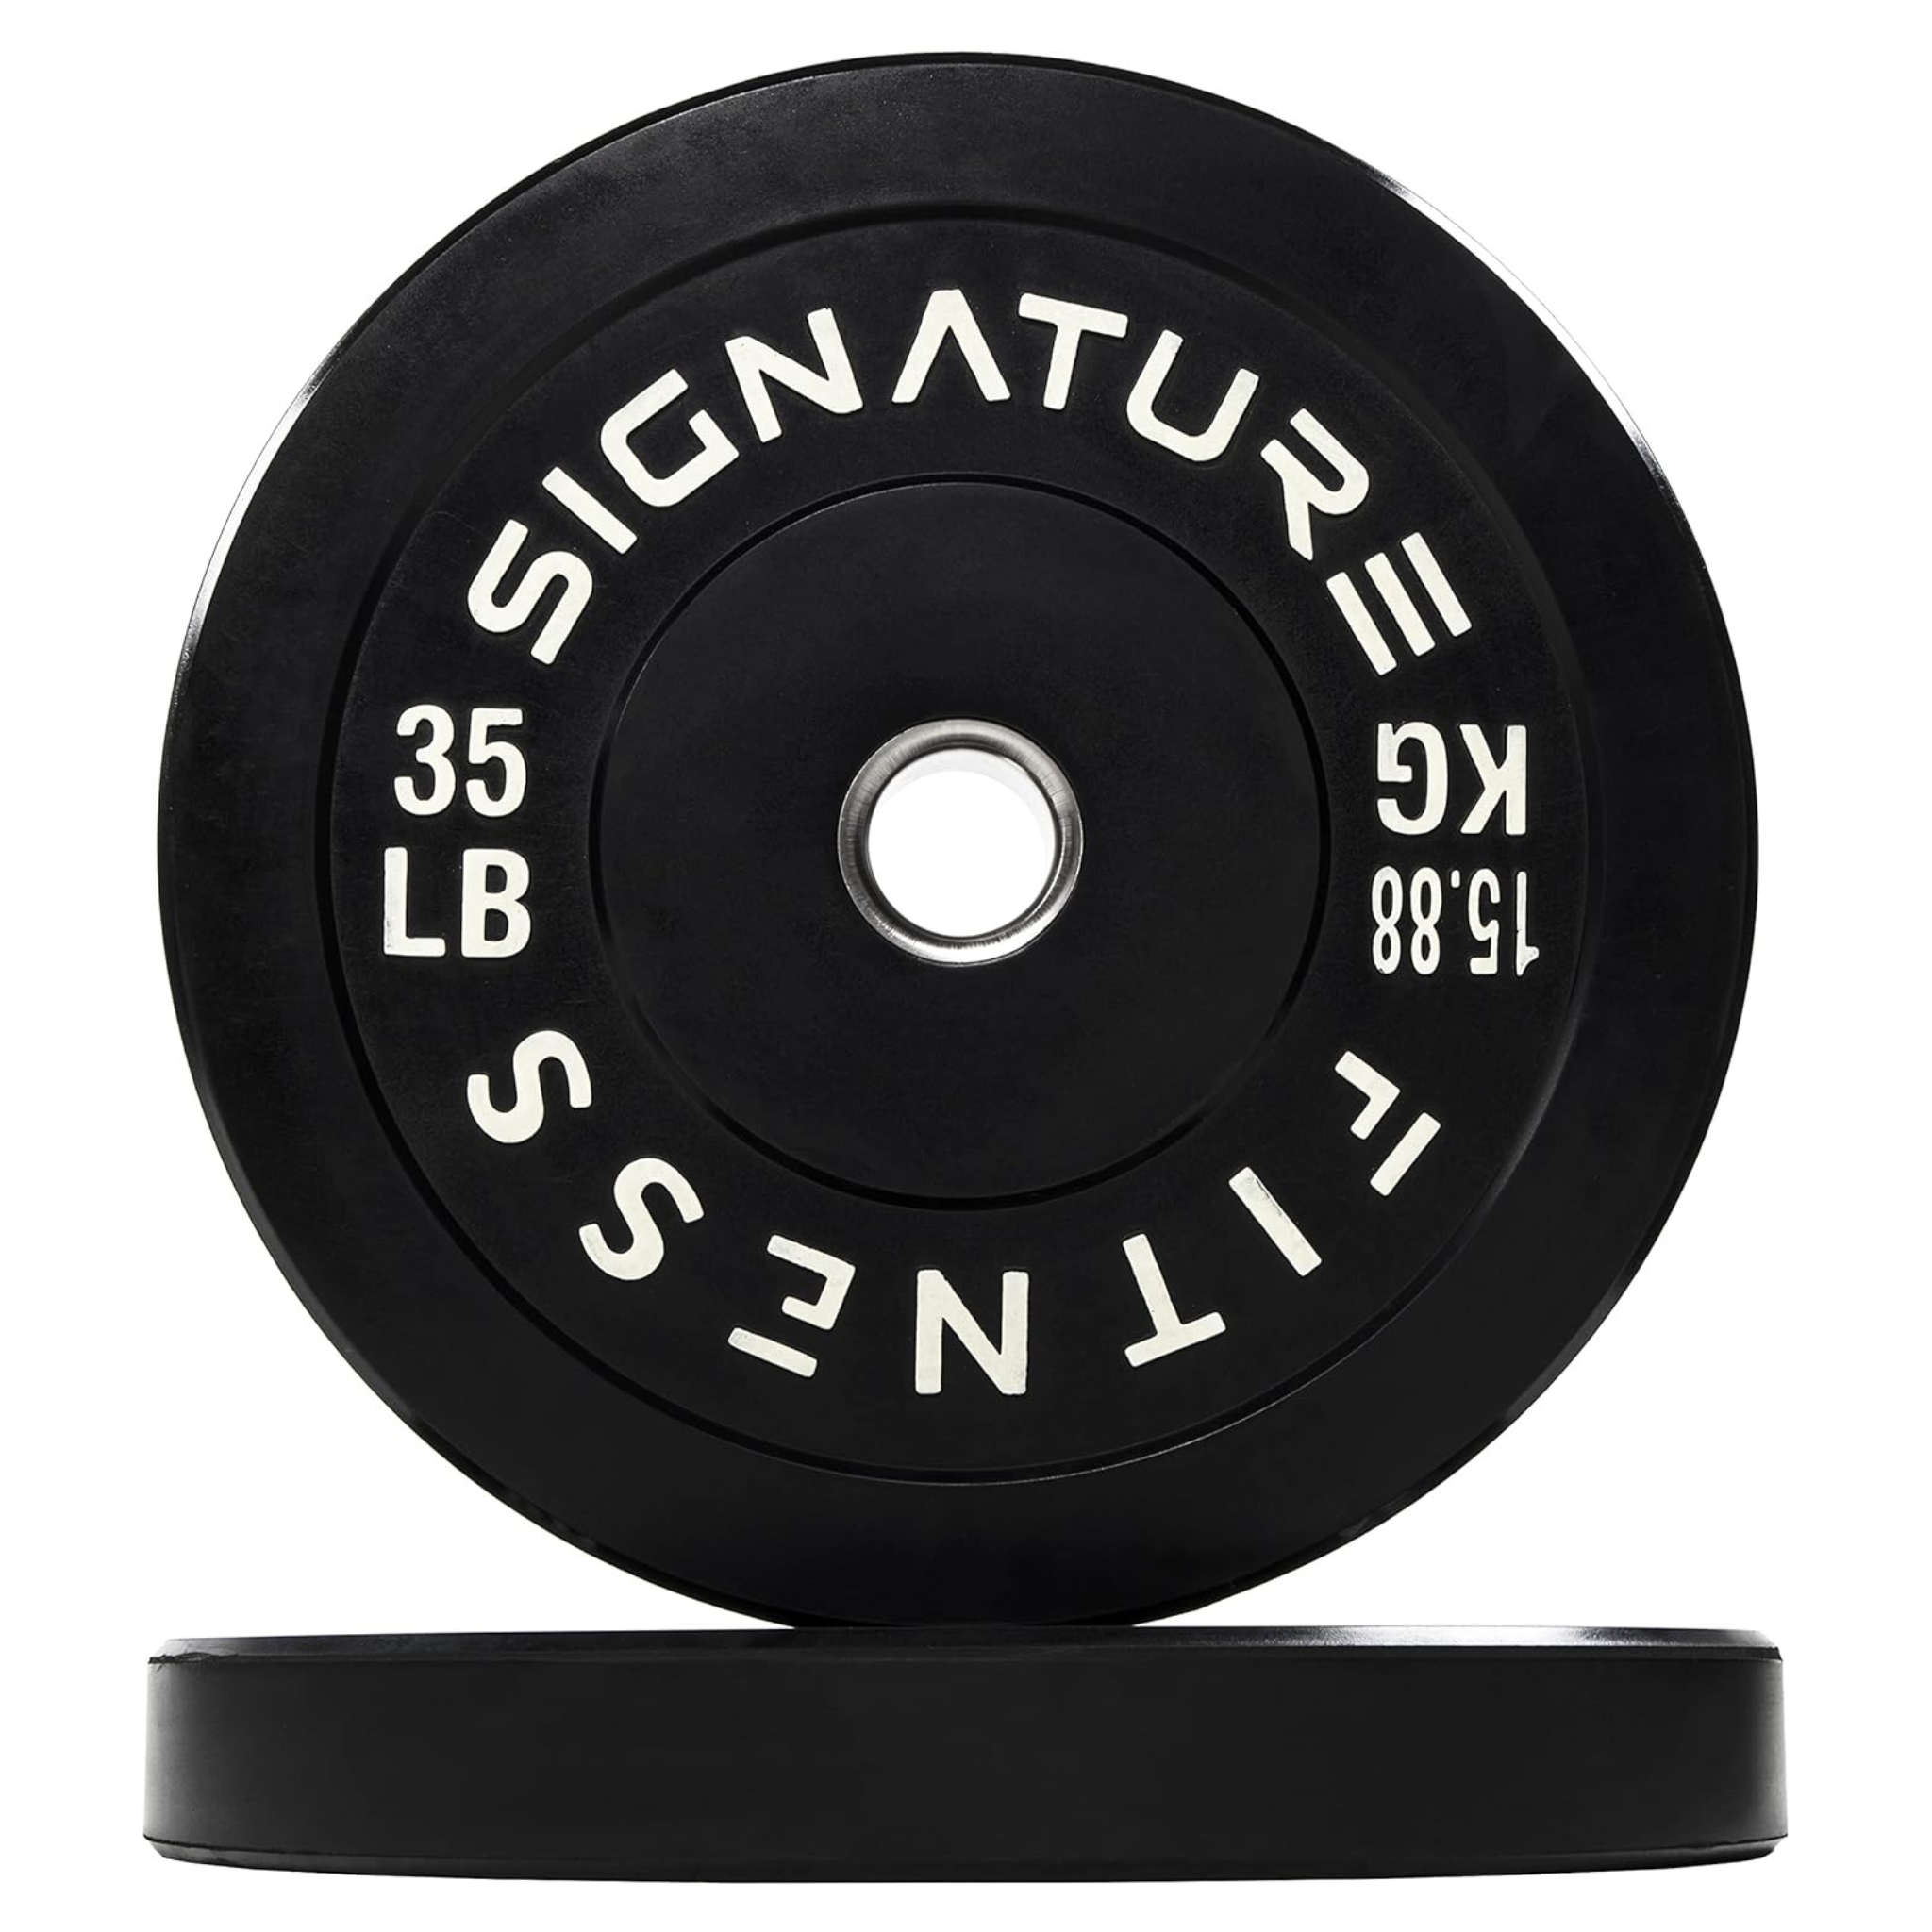 70lbs (2x 35lb) Signature Fitness 2" Olympic Bumper Plate Weight Plates w/ Steel Hub